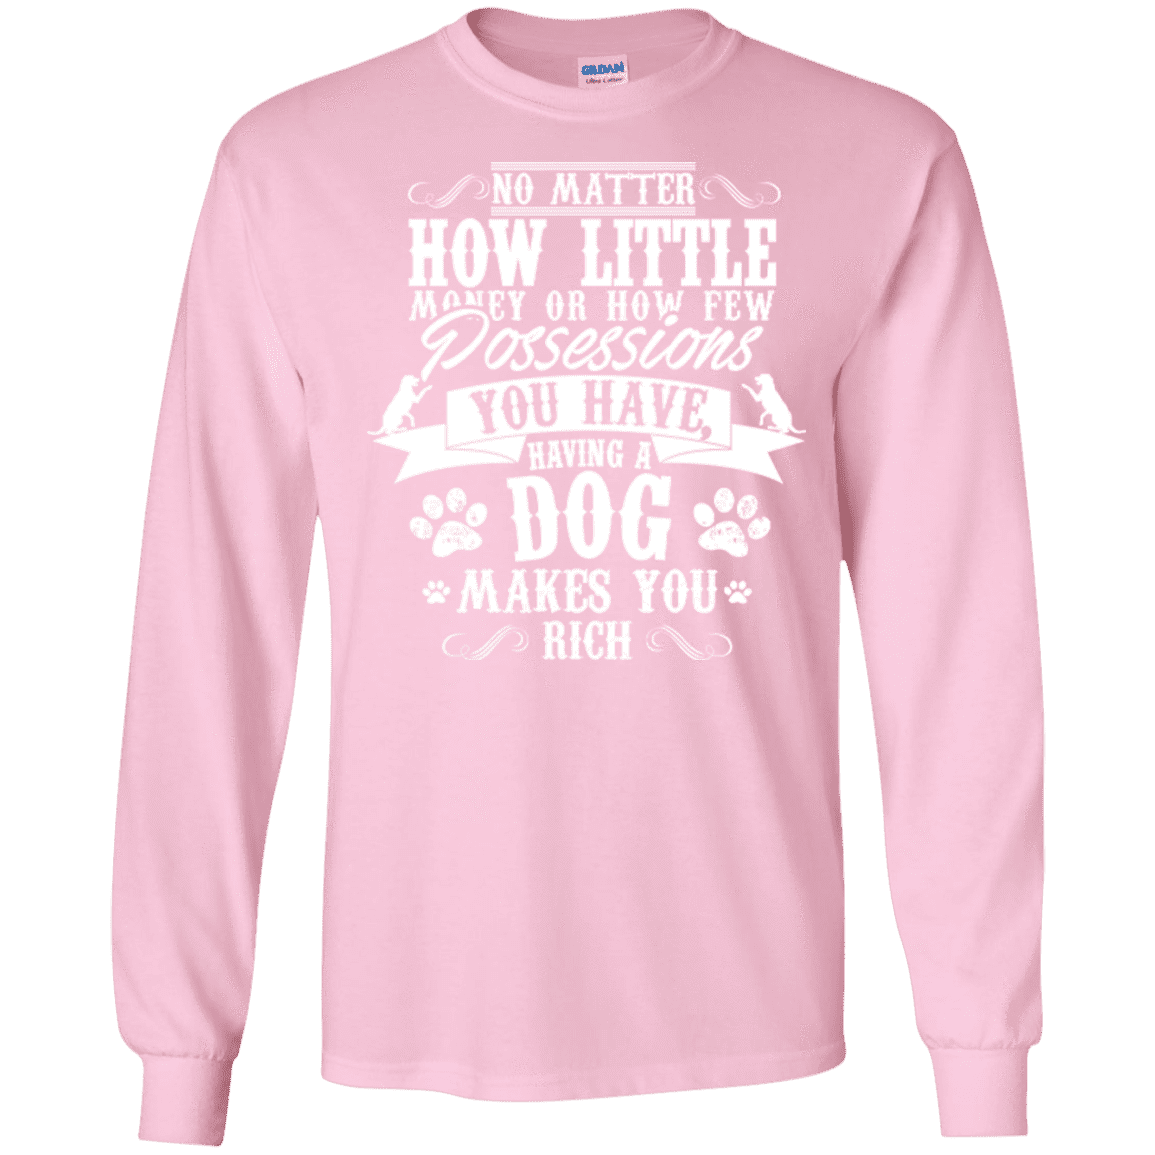 Dogs Make You Rich - Long Sleeve T Shirt.